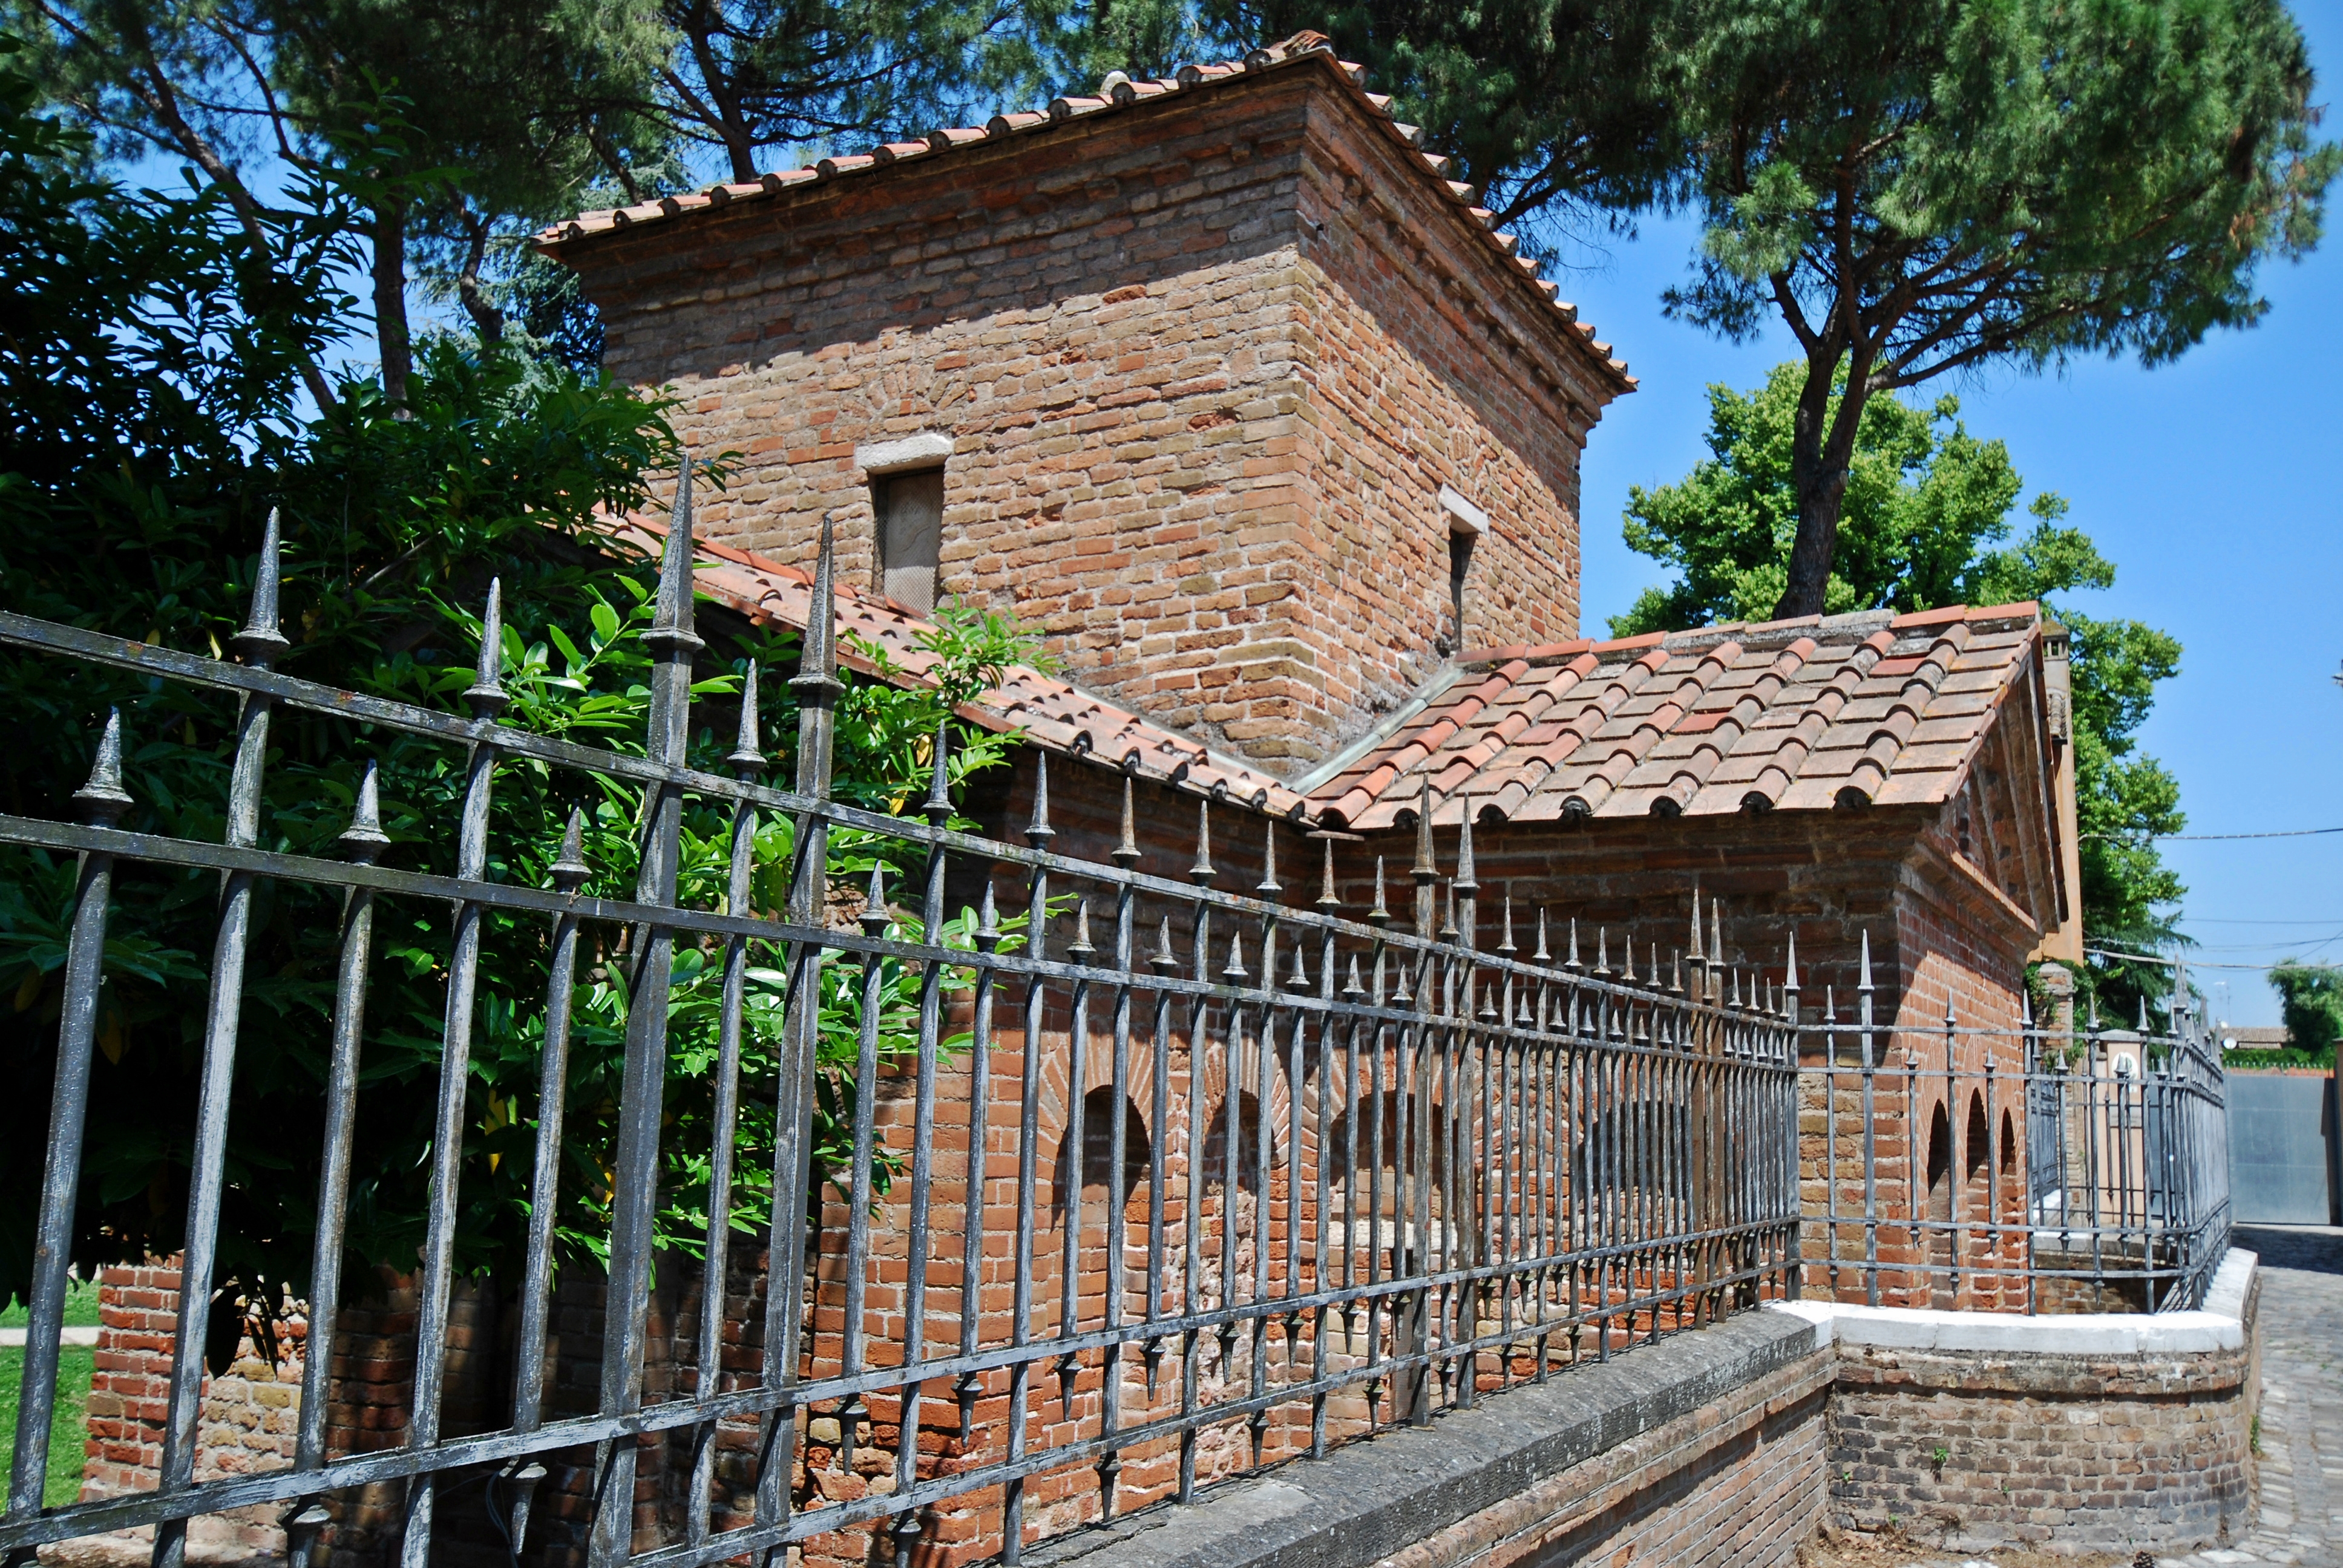 photo: https://upload.wikimedia.org/wikipedia/commons/e/e7/Mausoleo_di_Galla_Placidia_001.jpg